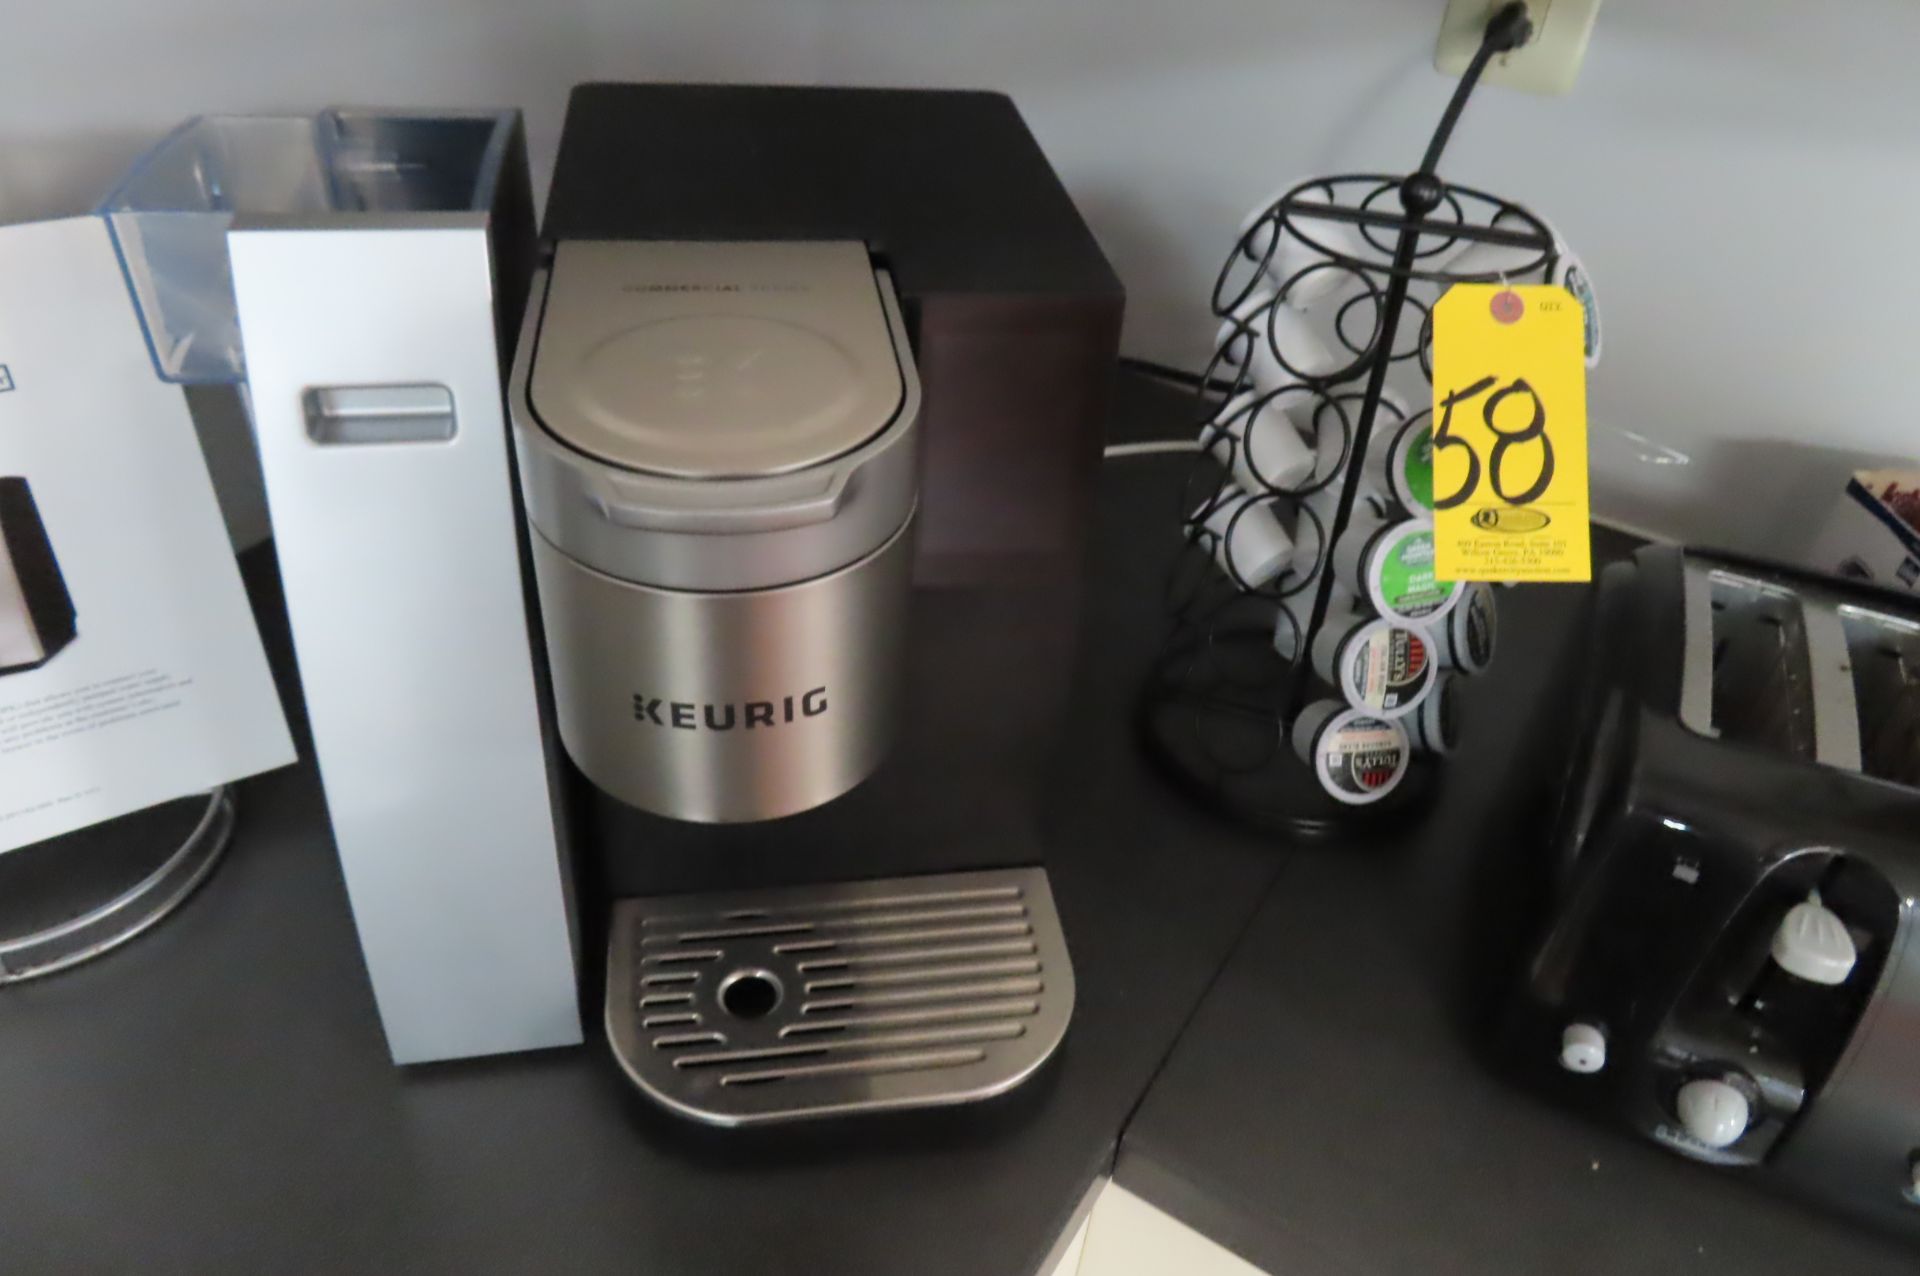 KEURIG K150 COMMERICAL COFFEE BREWER WITH DIRECT PLUMB KIT, SUNBEAM 4-SLOT TOASTER AND KEURIG… - Image 2 of 3